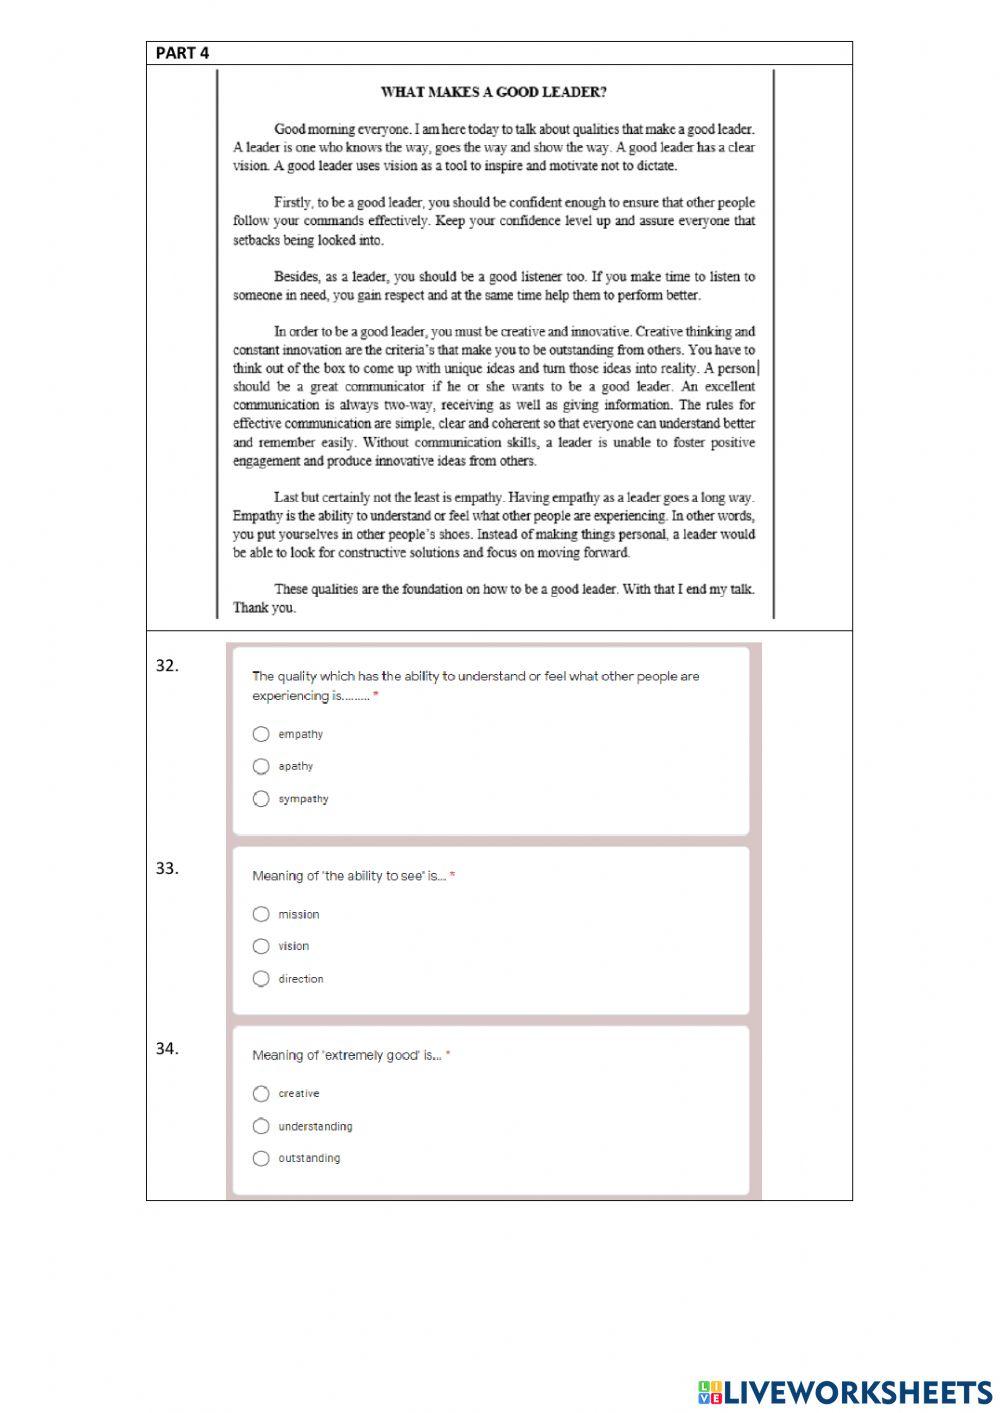 Form 2 english assessment 2021 (part 2)